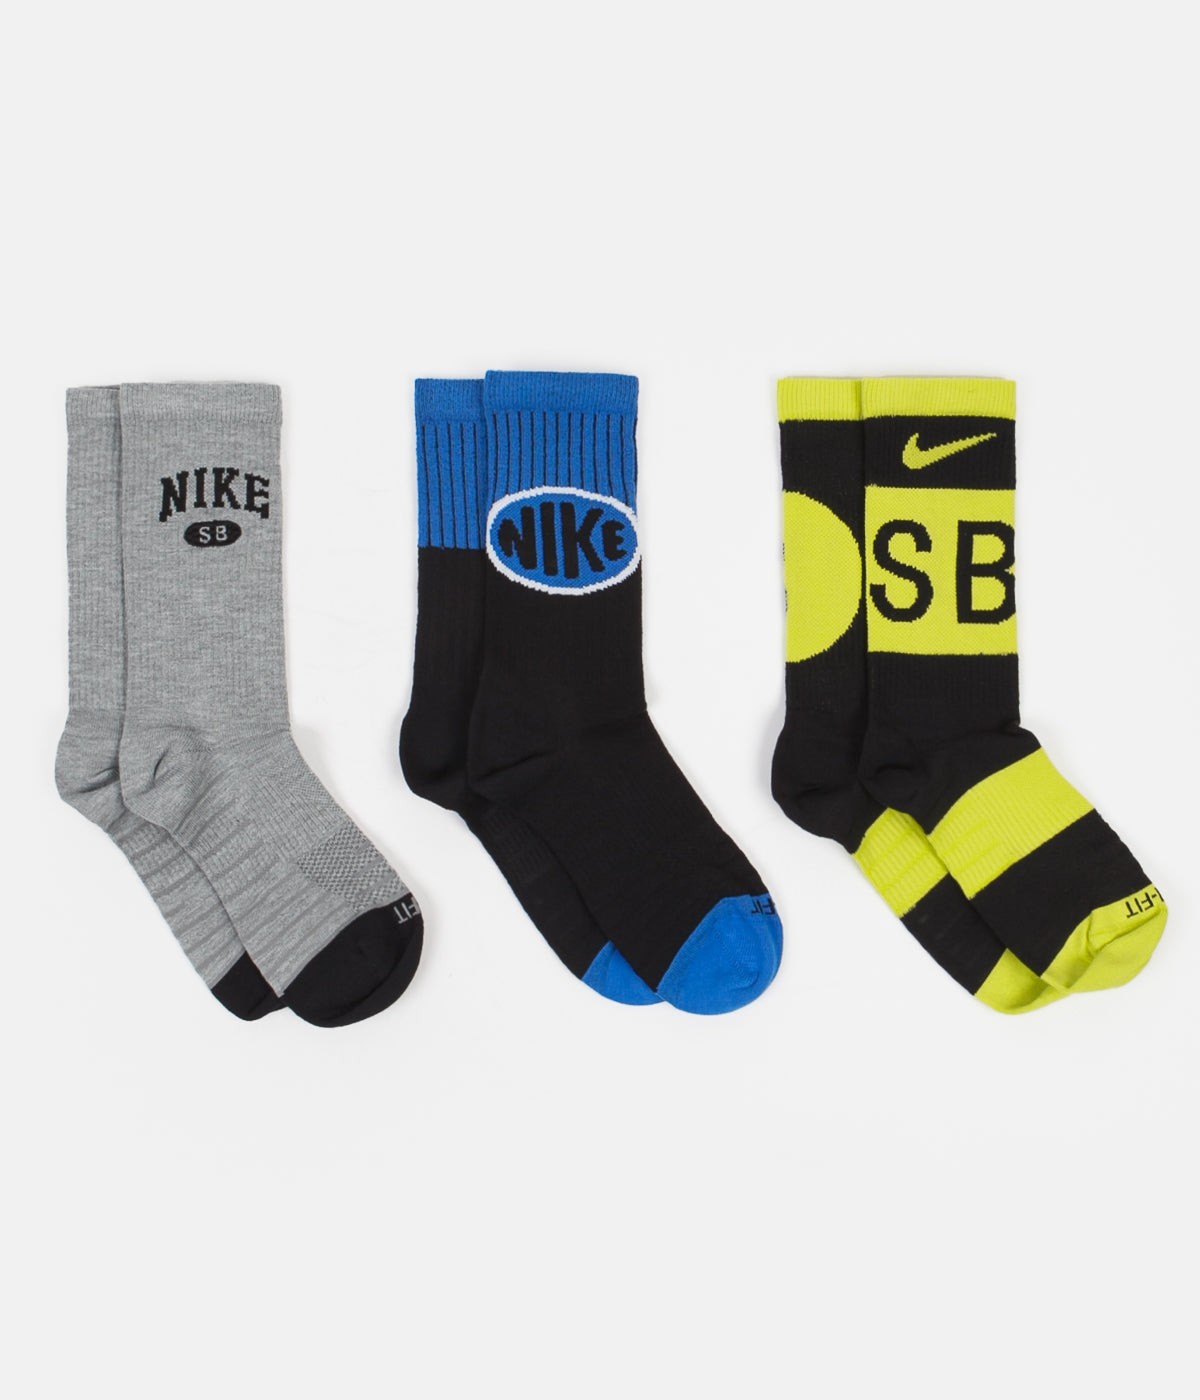 nike comfort socks